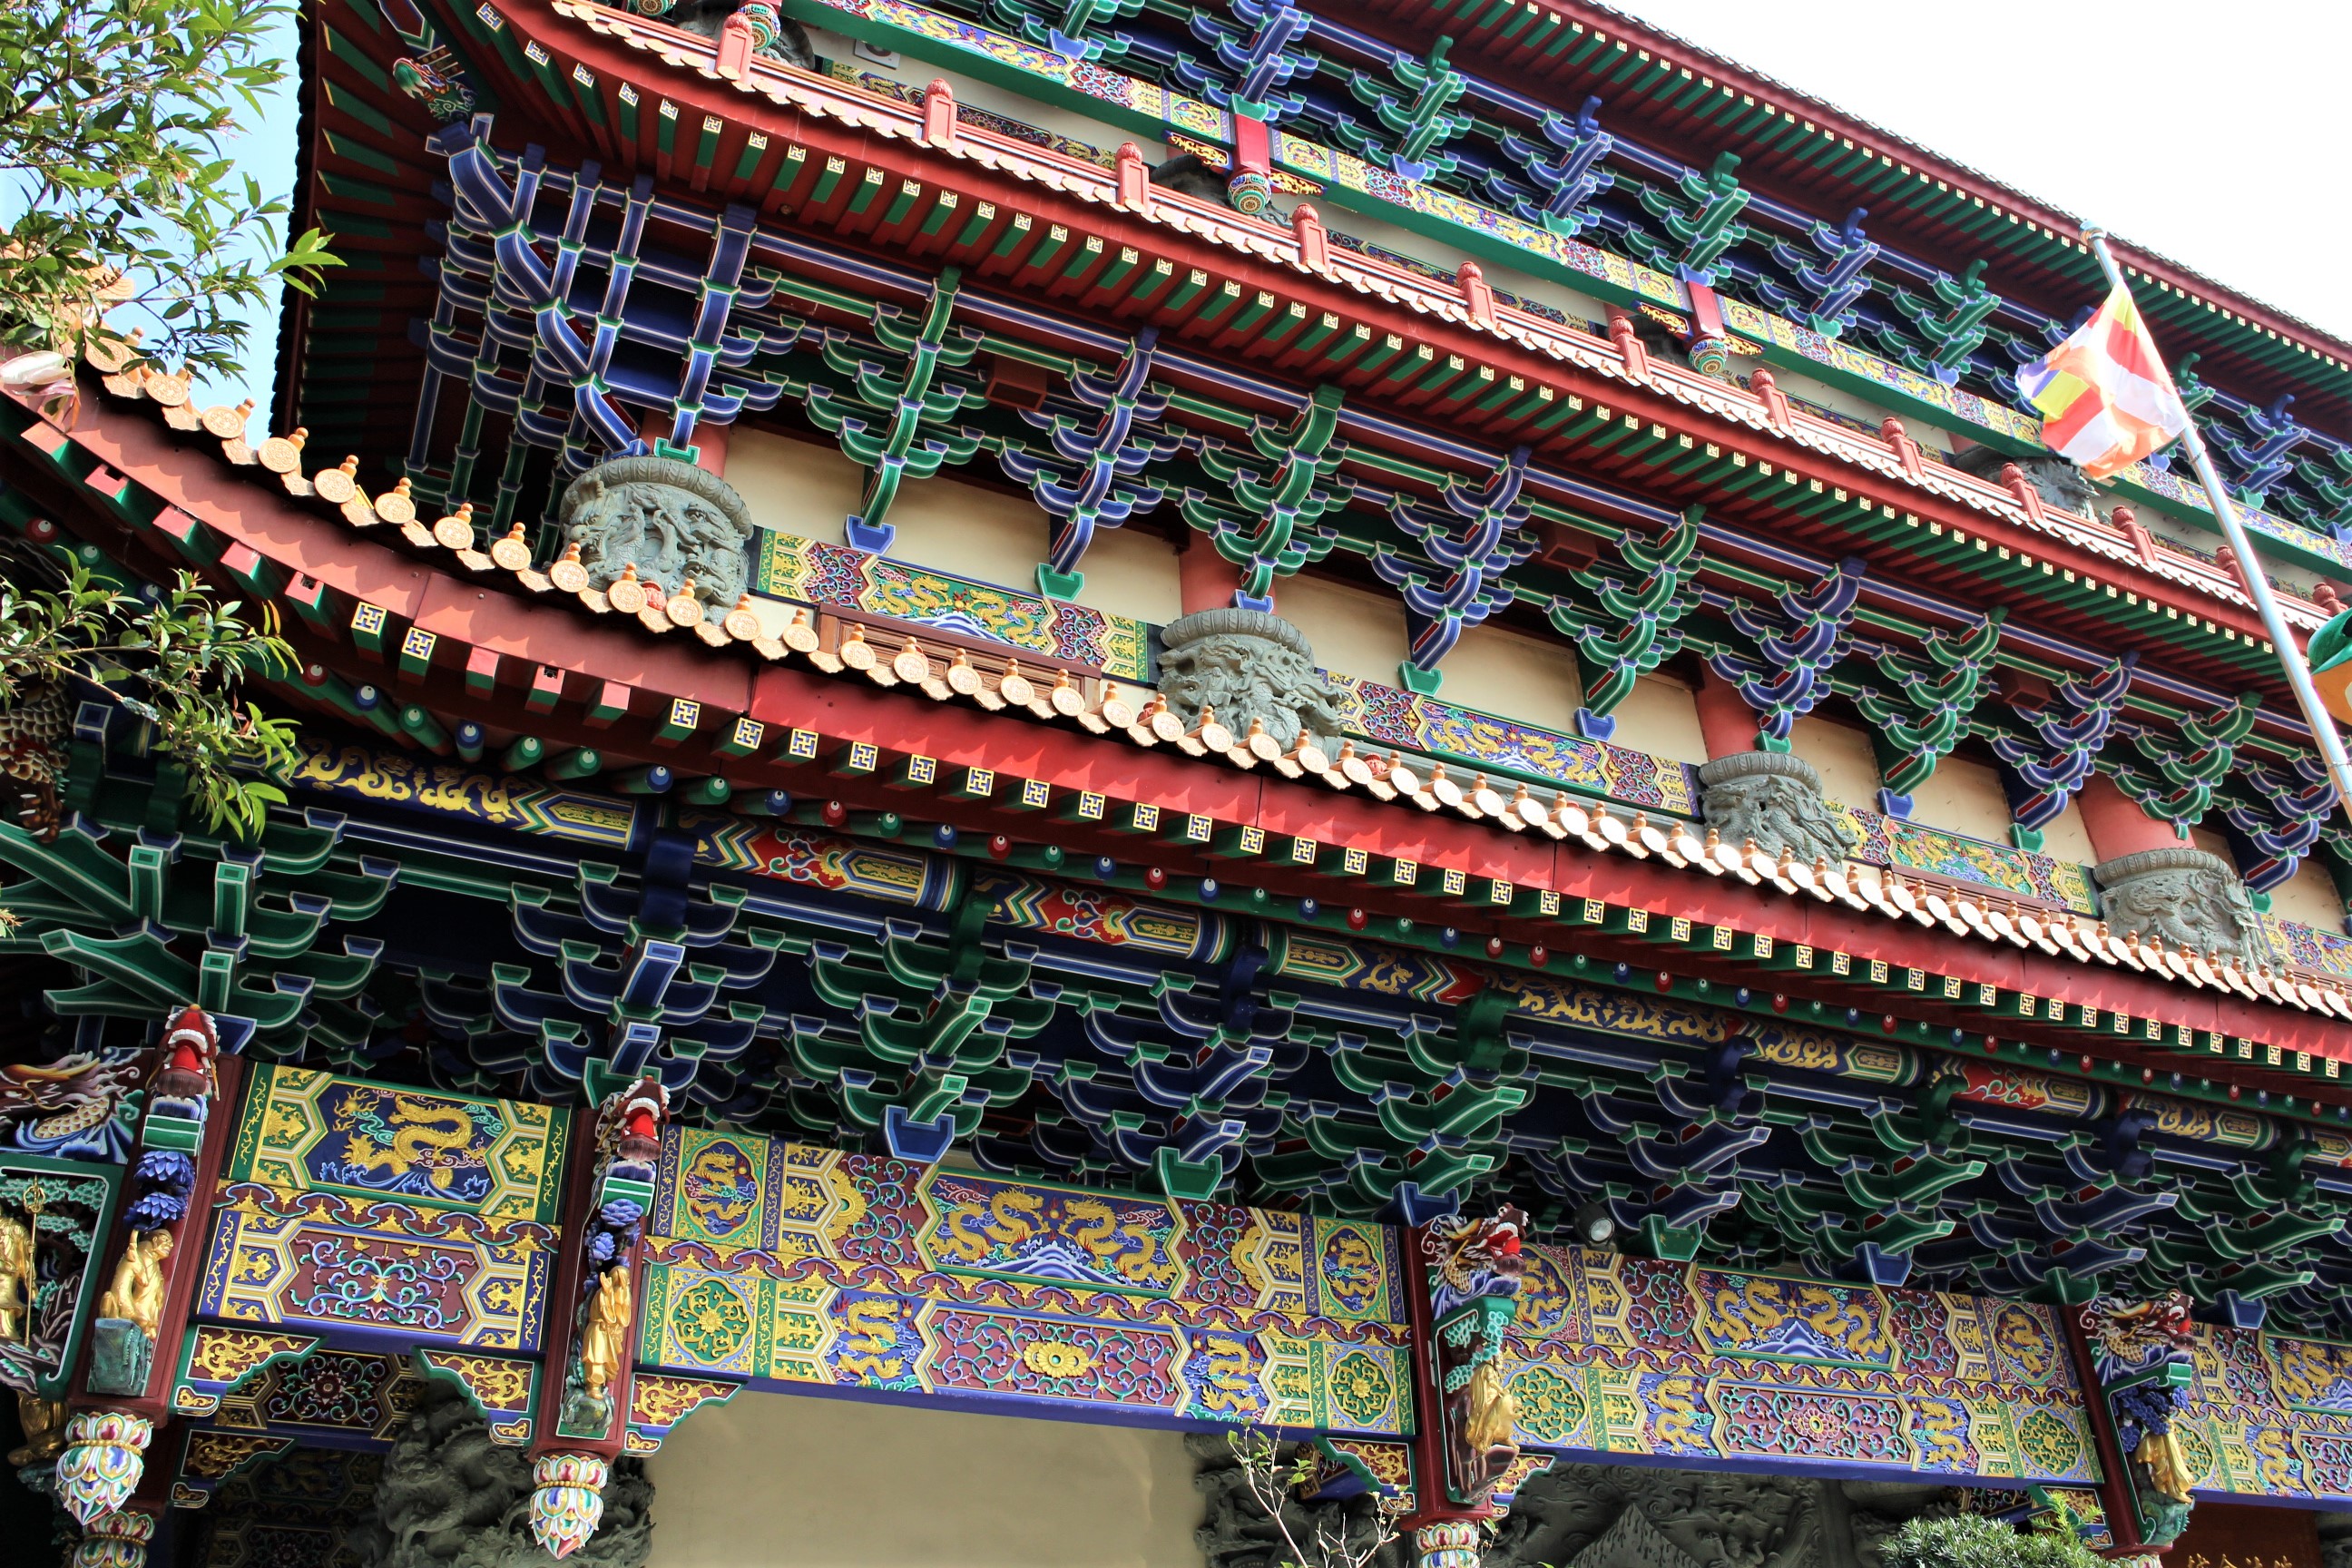 Po Lin monastery